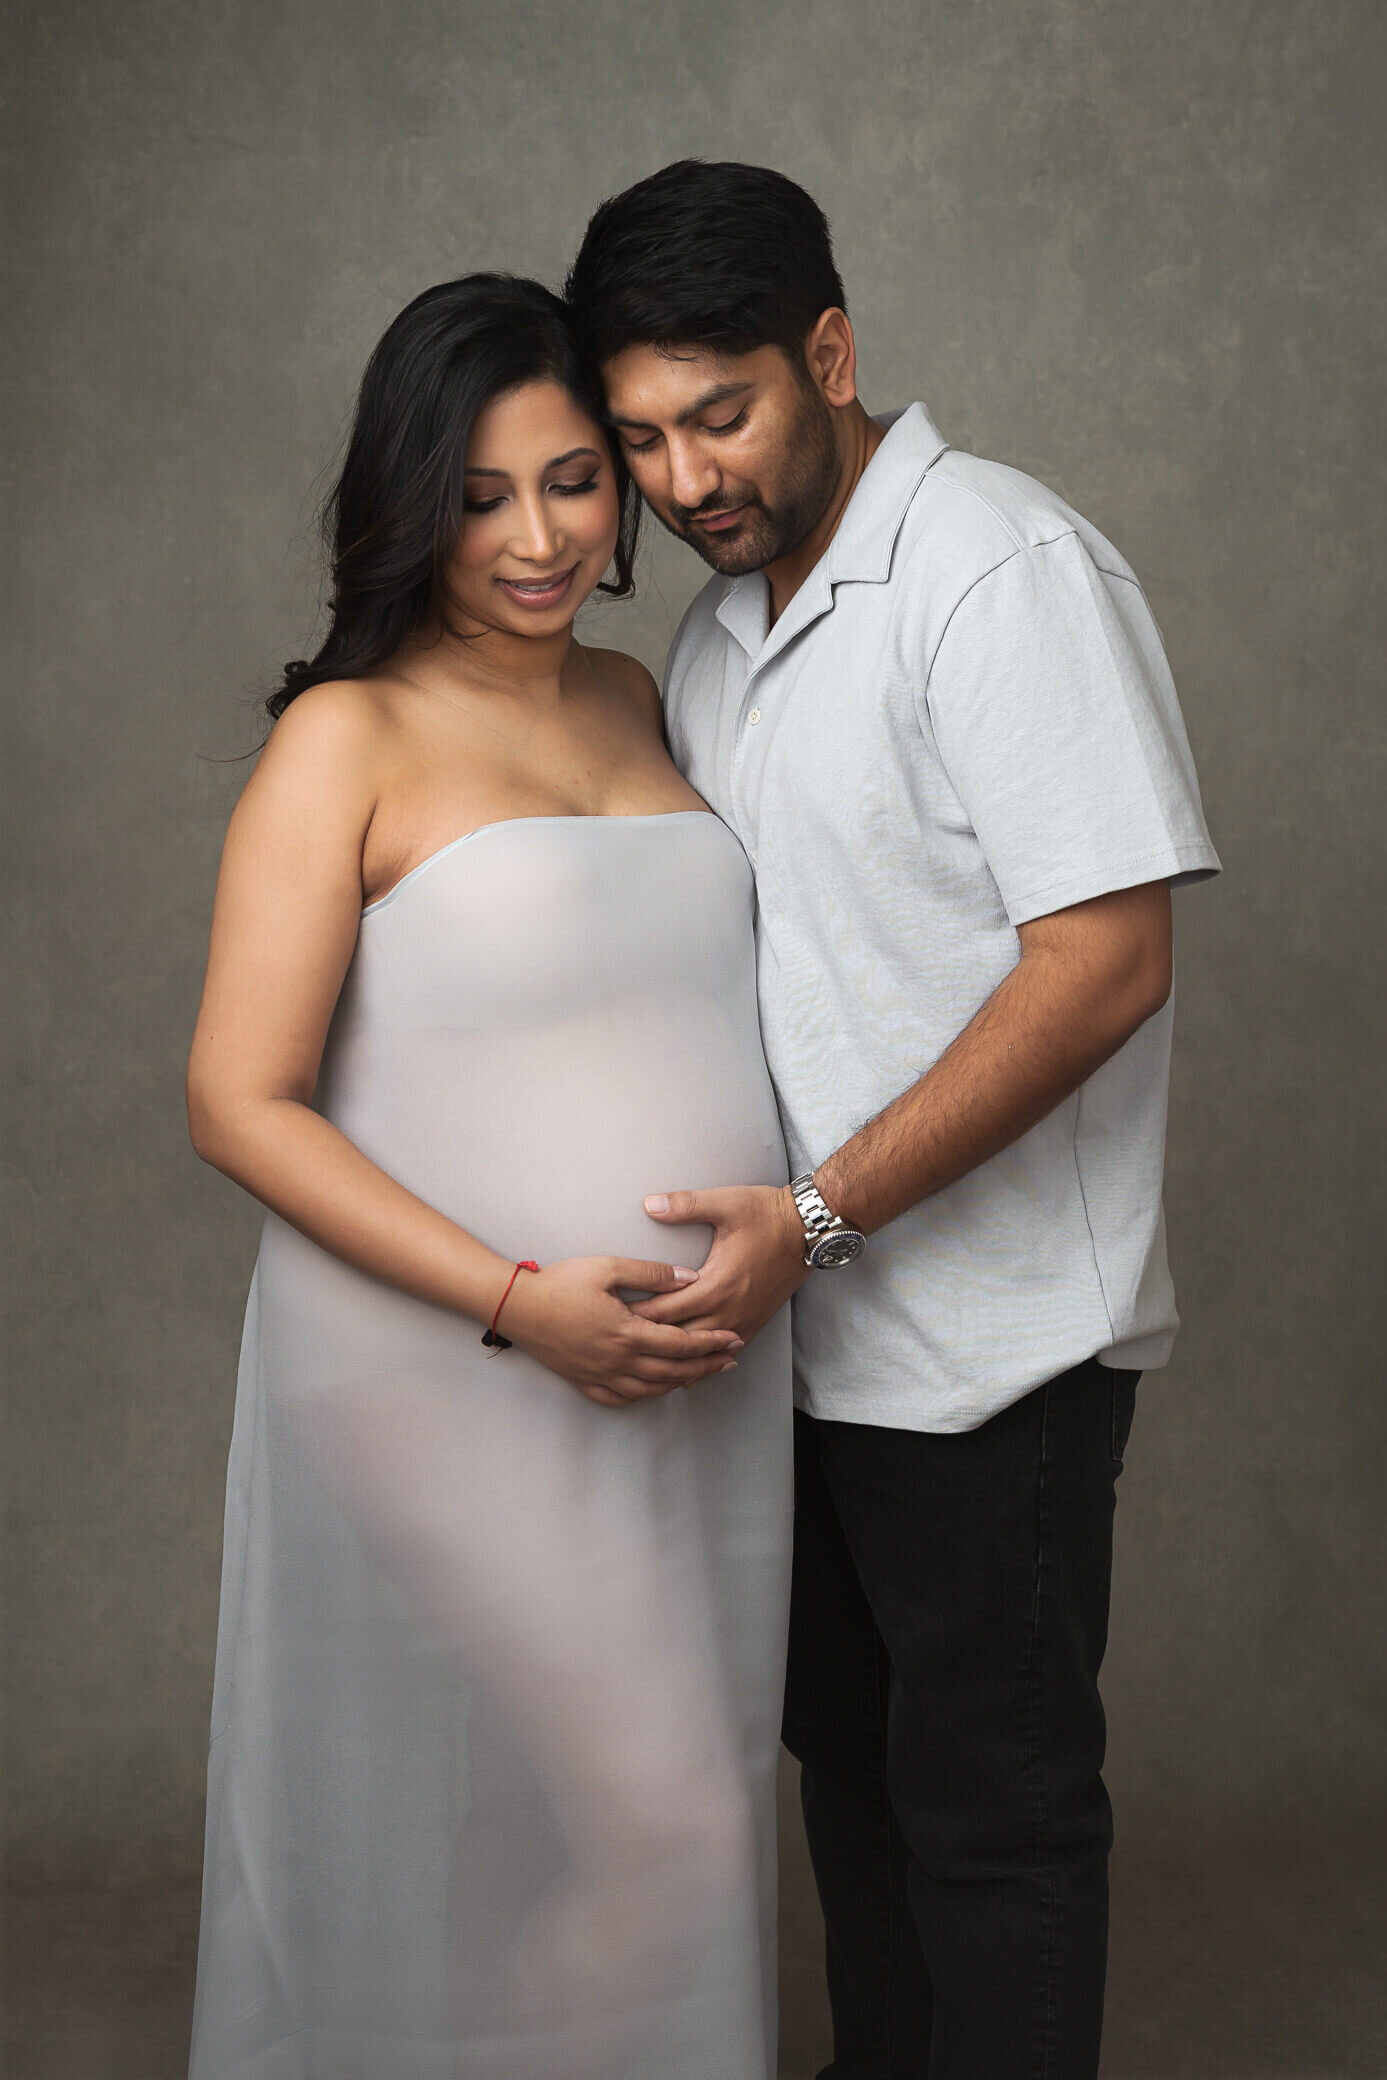 couple maternity photo in studio using fabric